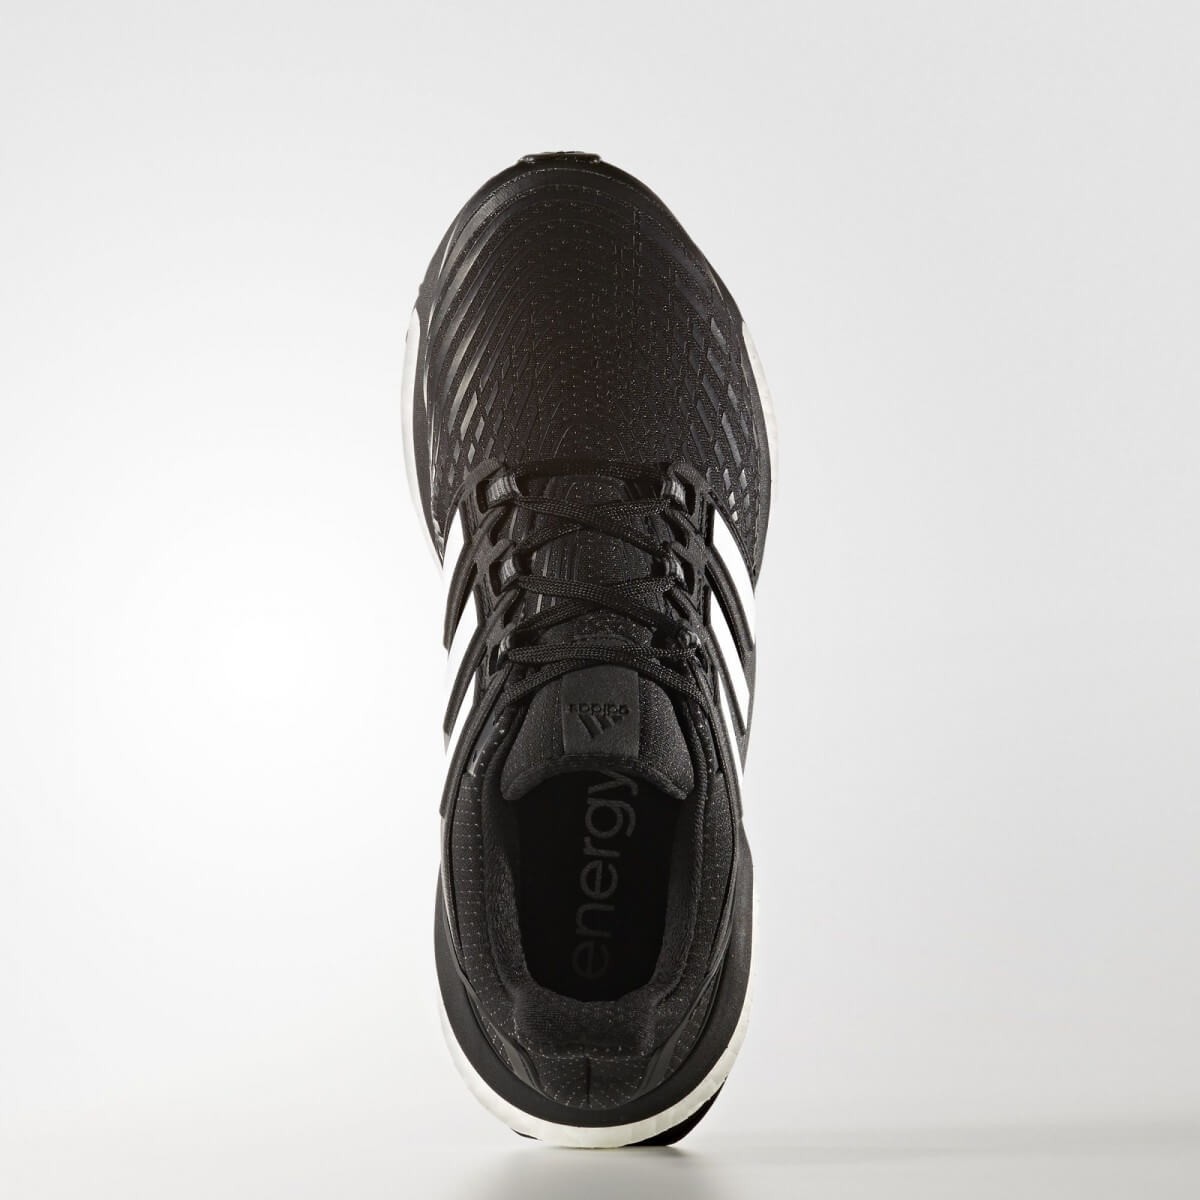 Indica fiabilidad Caducado Running shoes Adidas Energy Boost 3 color black woman AW17